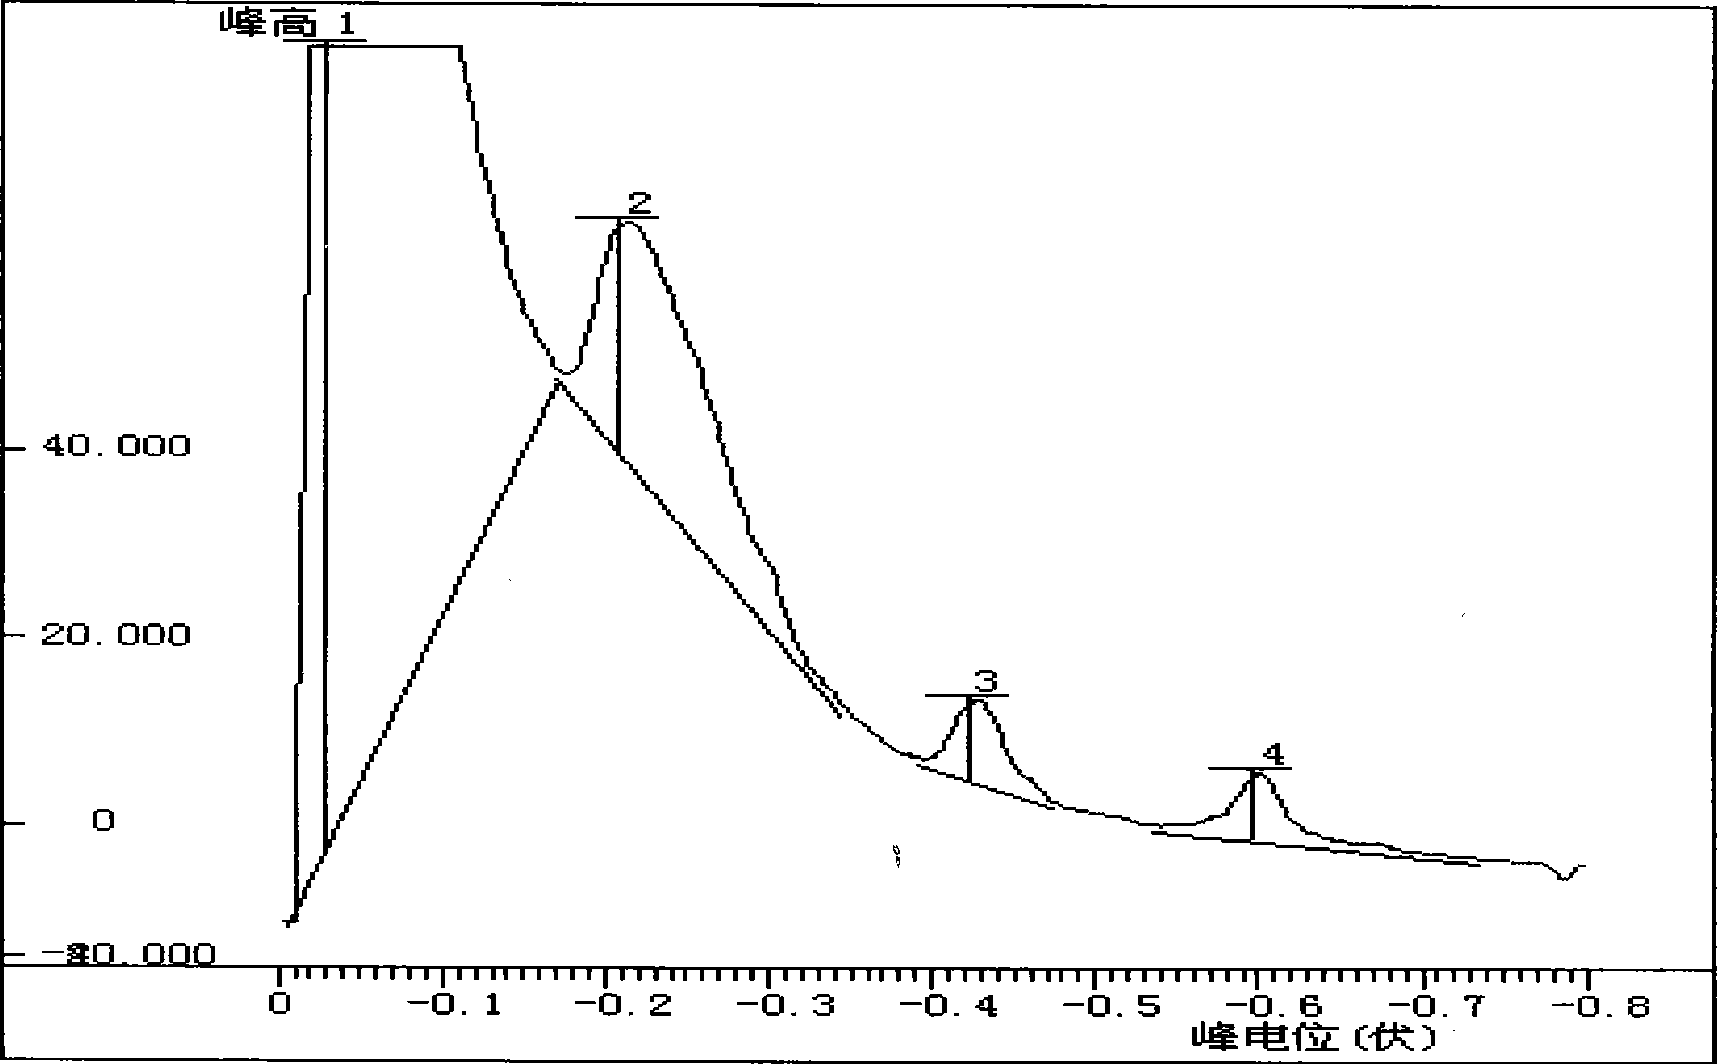 Quantitative analysis method capable of reducing analytical apparatus spectrogram relative deviation RSD